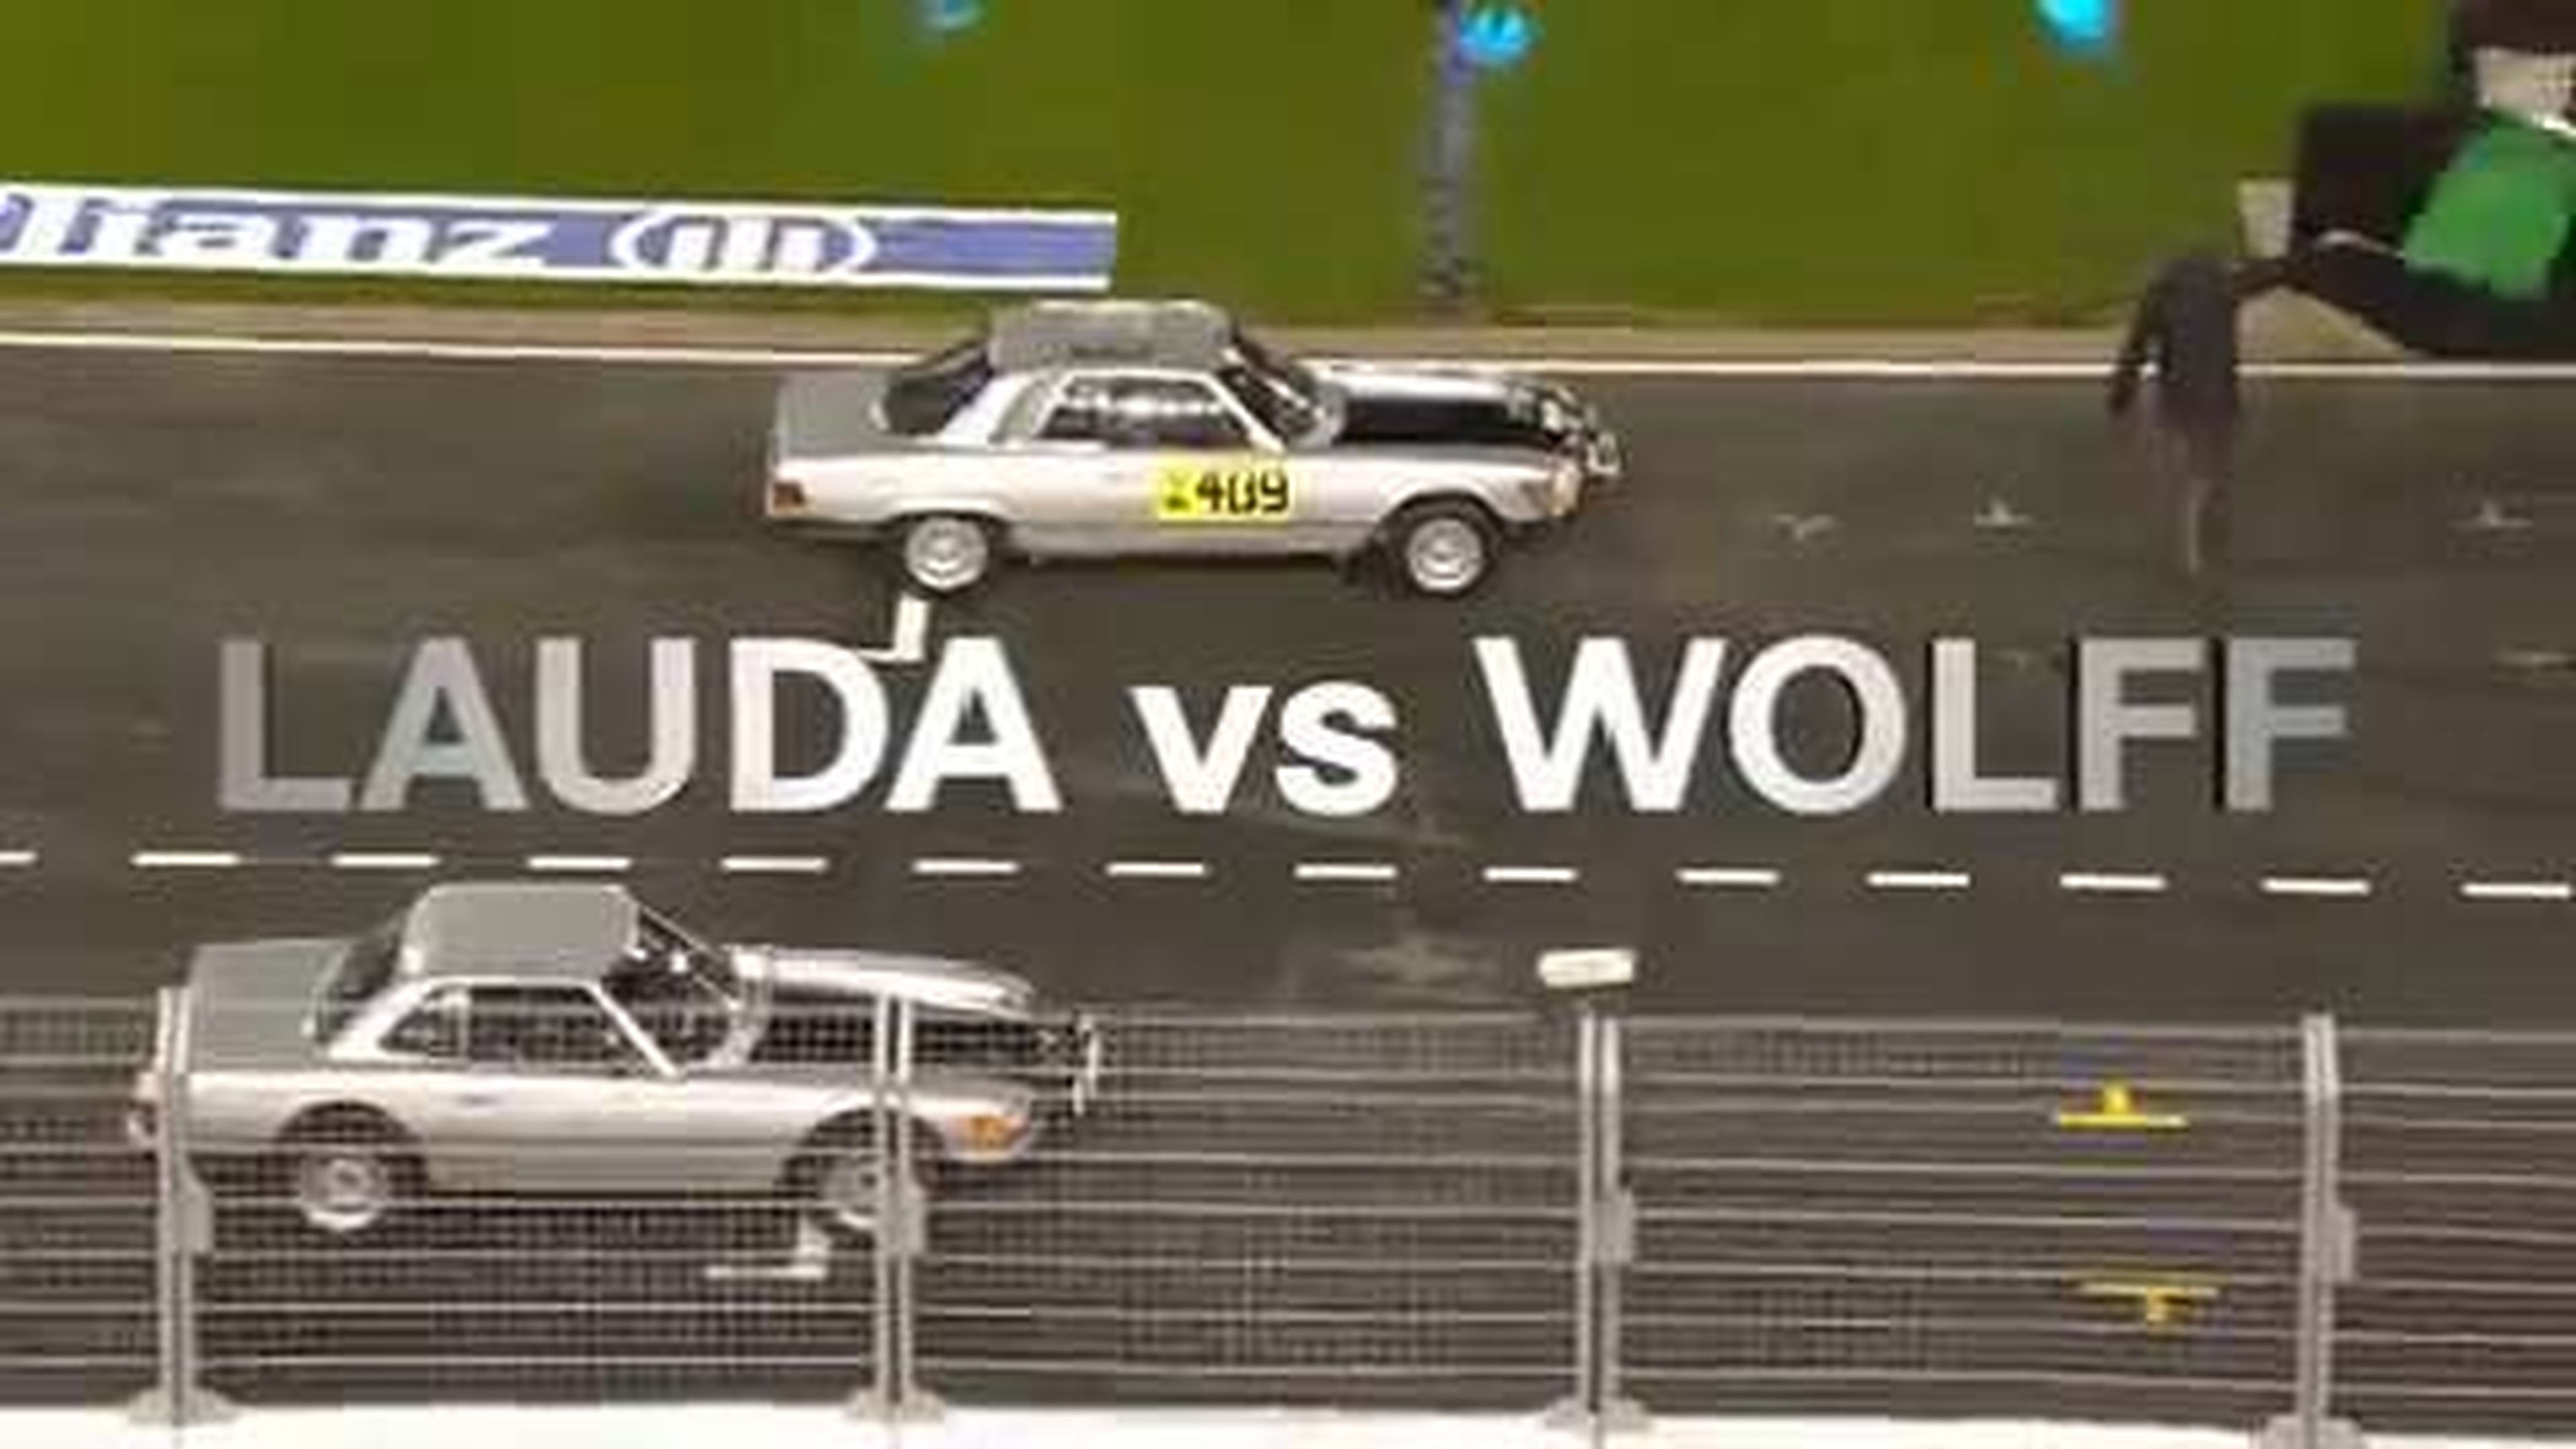 Lauda vs Wolff - The ultimate car battle!